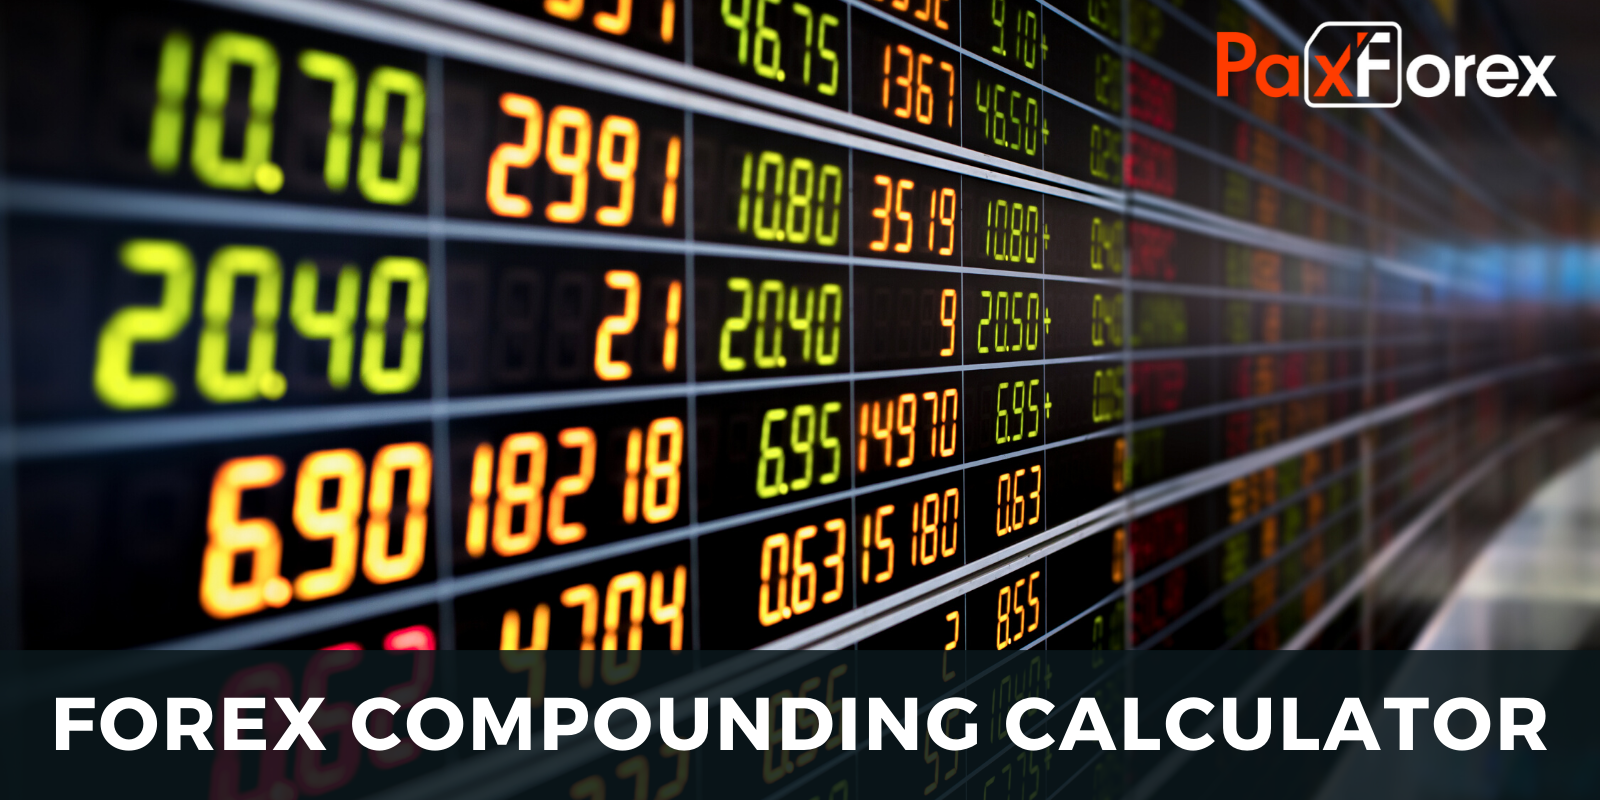 Forex compounding calculator 